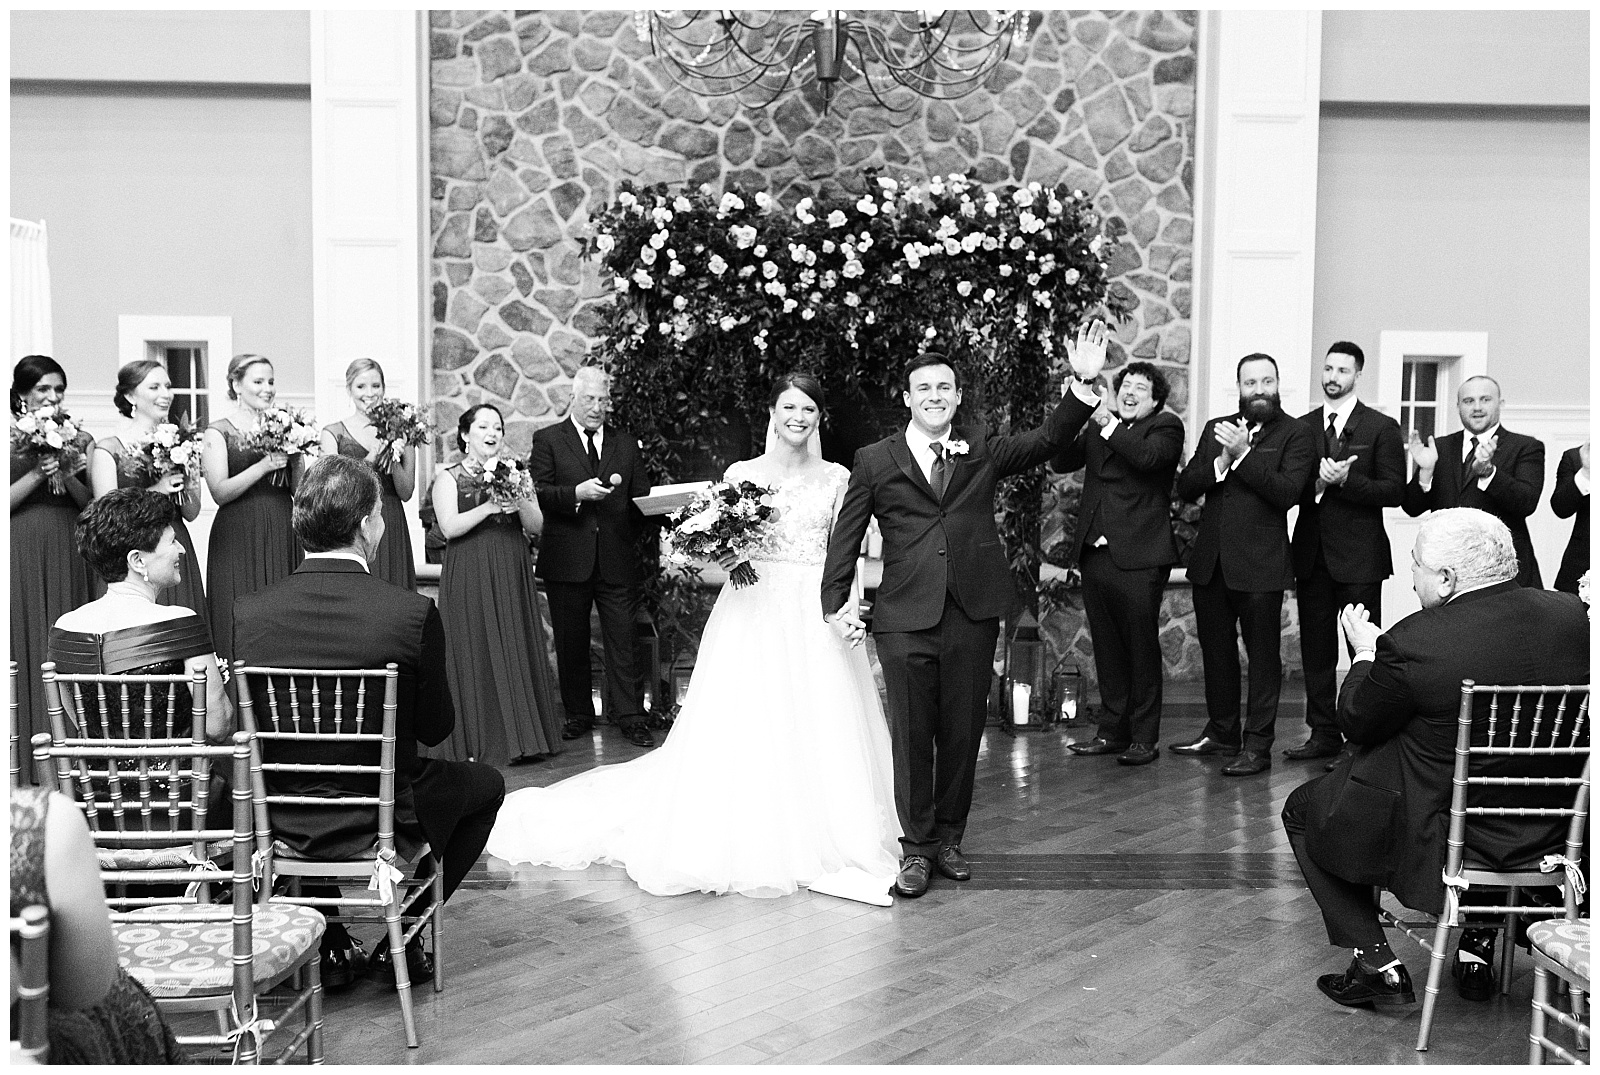 Ceremony,NJ,New Jersey,The Ryland Inn,Twisted Willow,Wedding,Wedding Photographer,Winter,